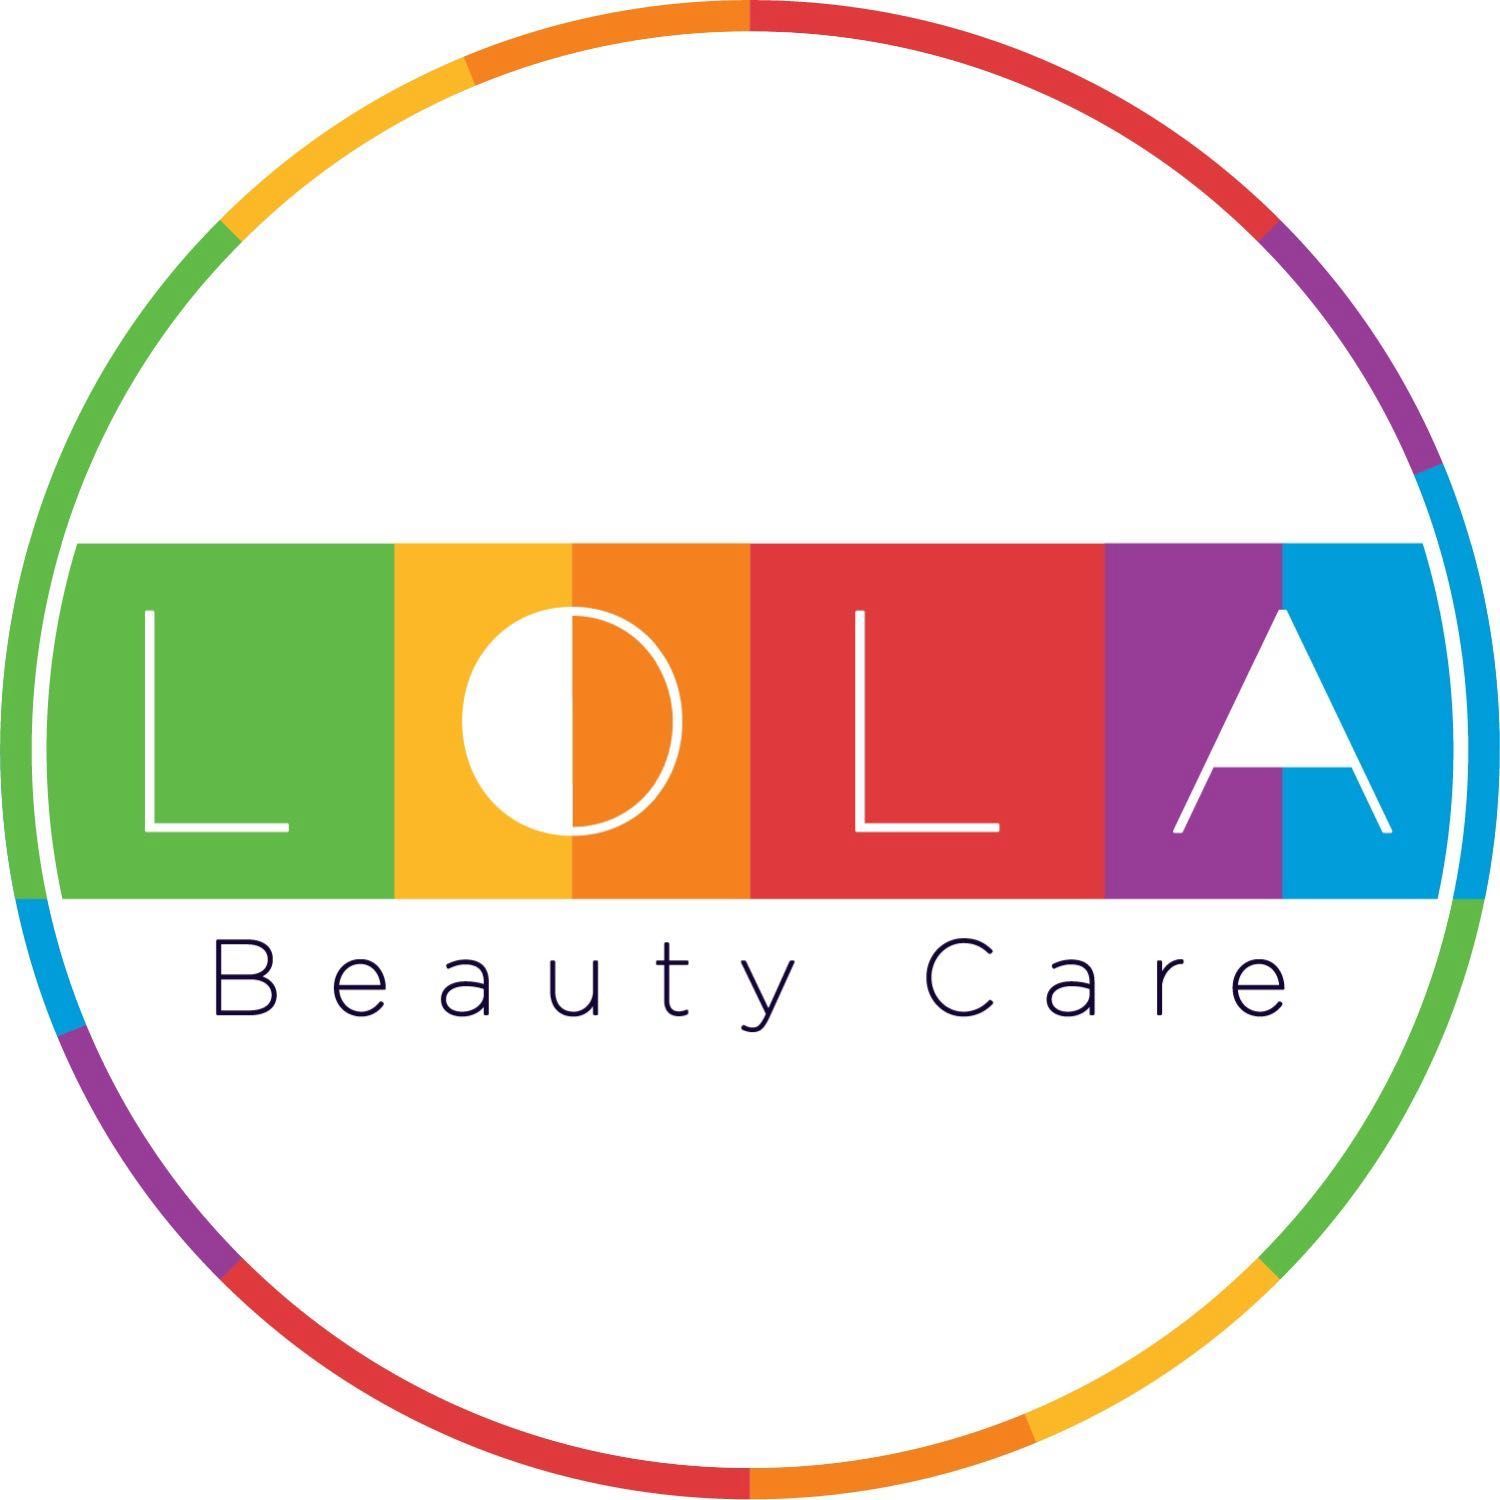 Lola Beauty Care, 3516 Cottman Ave, Philadelphia, 19149